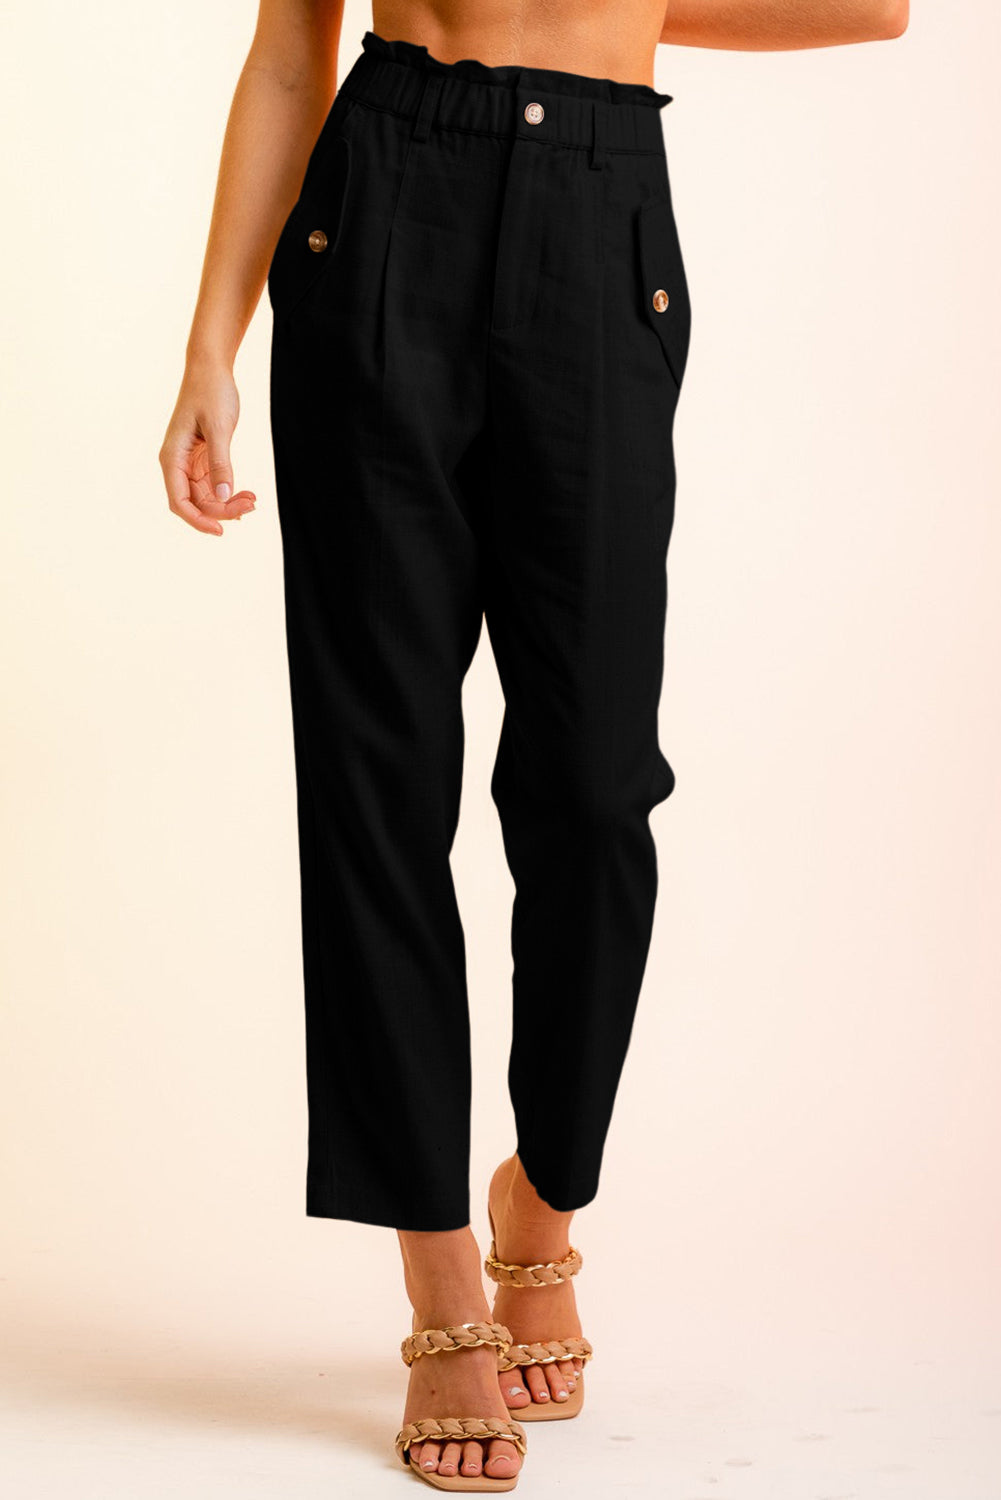 Black Button Flap Pocket High Waisted Linen Womens Pants - US2EInc Apparel Plug Ltd. Co